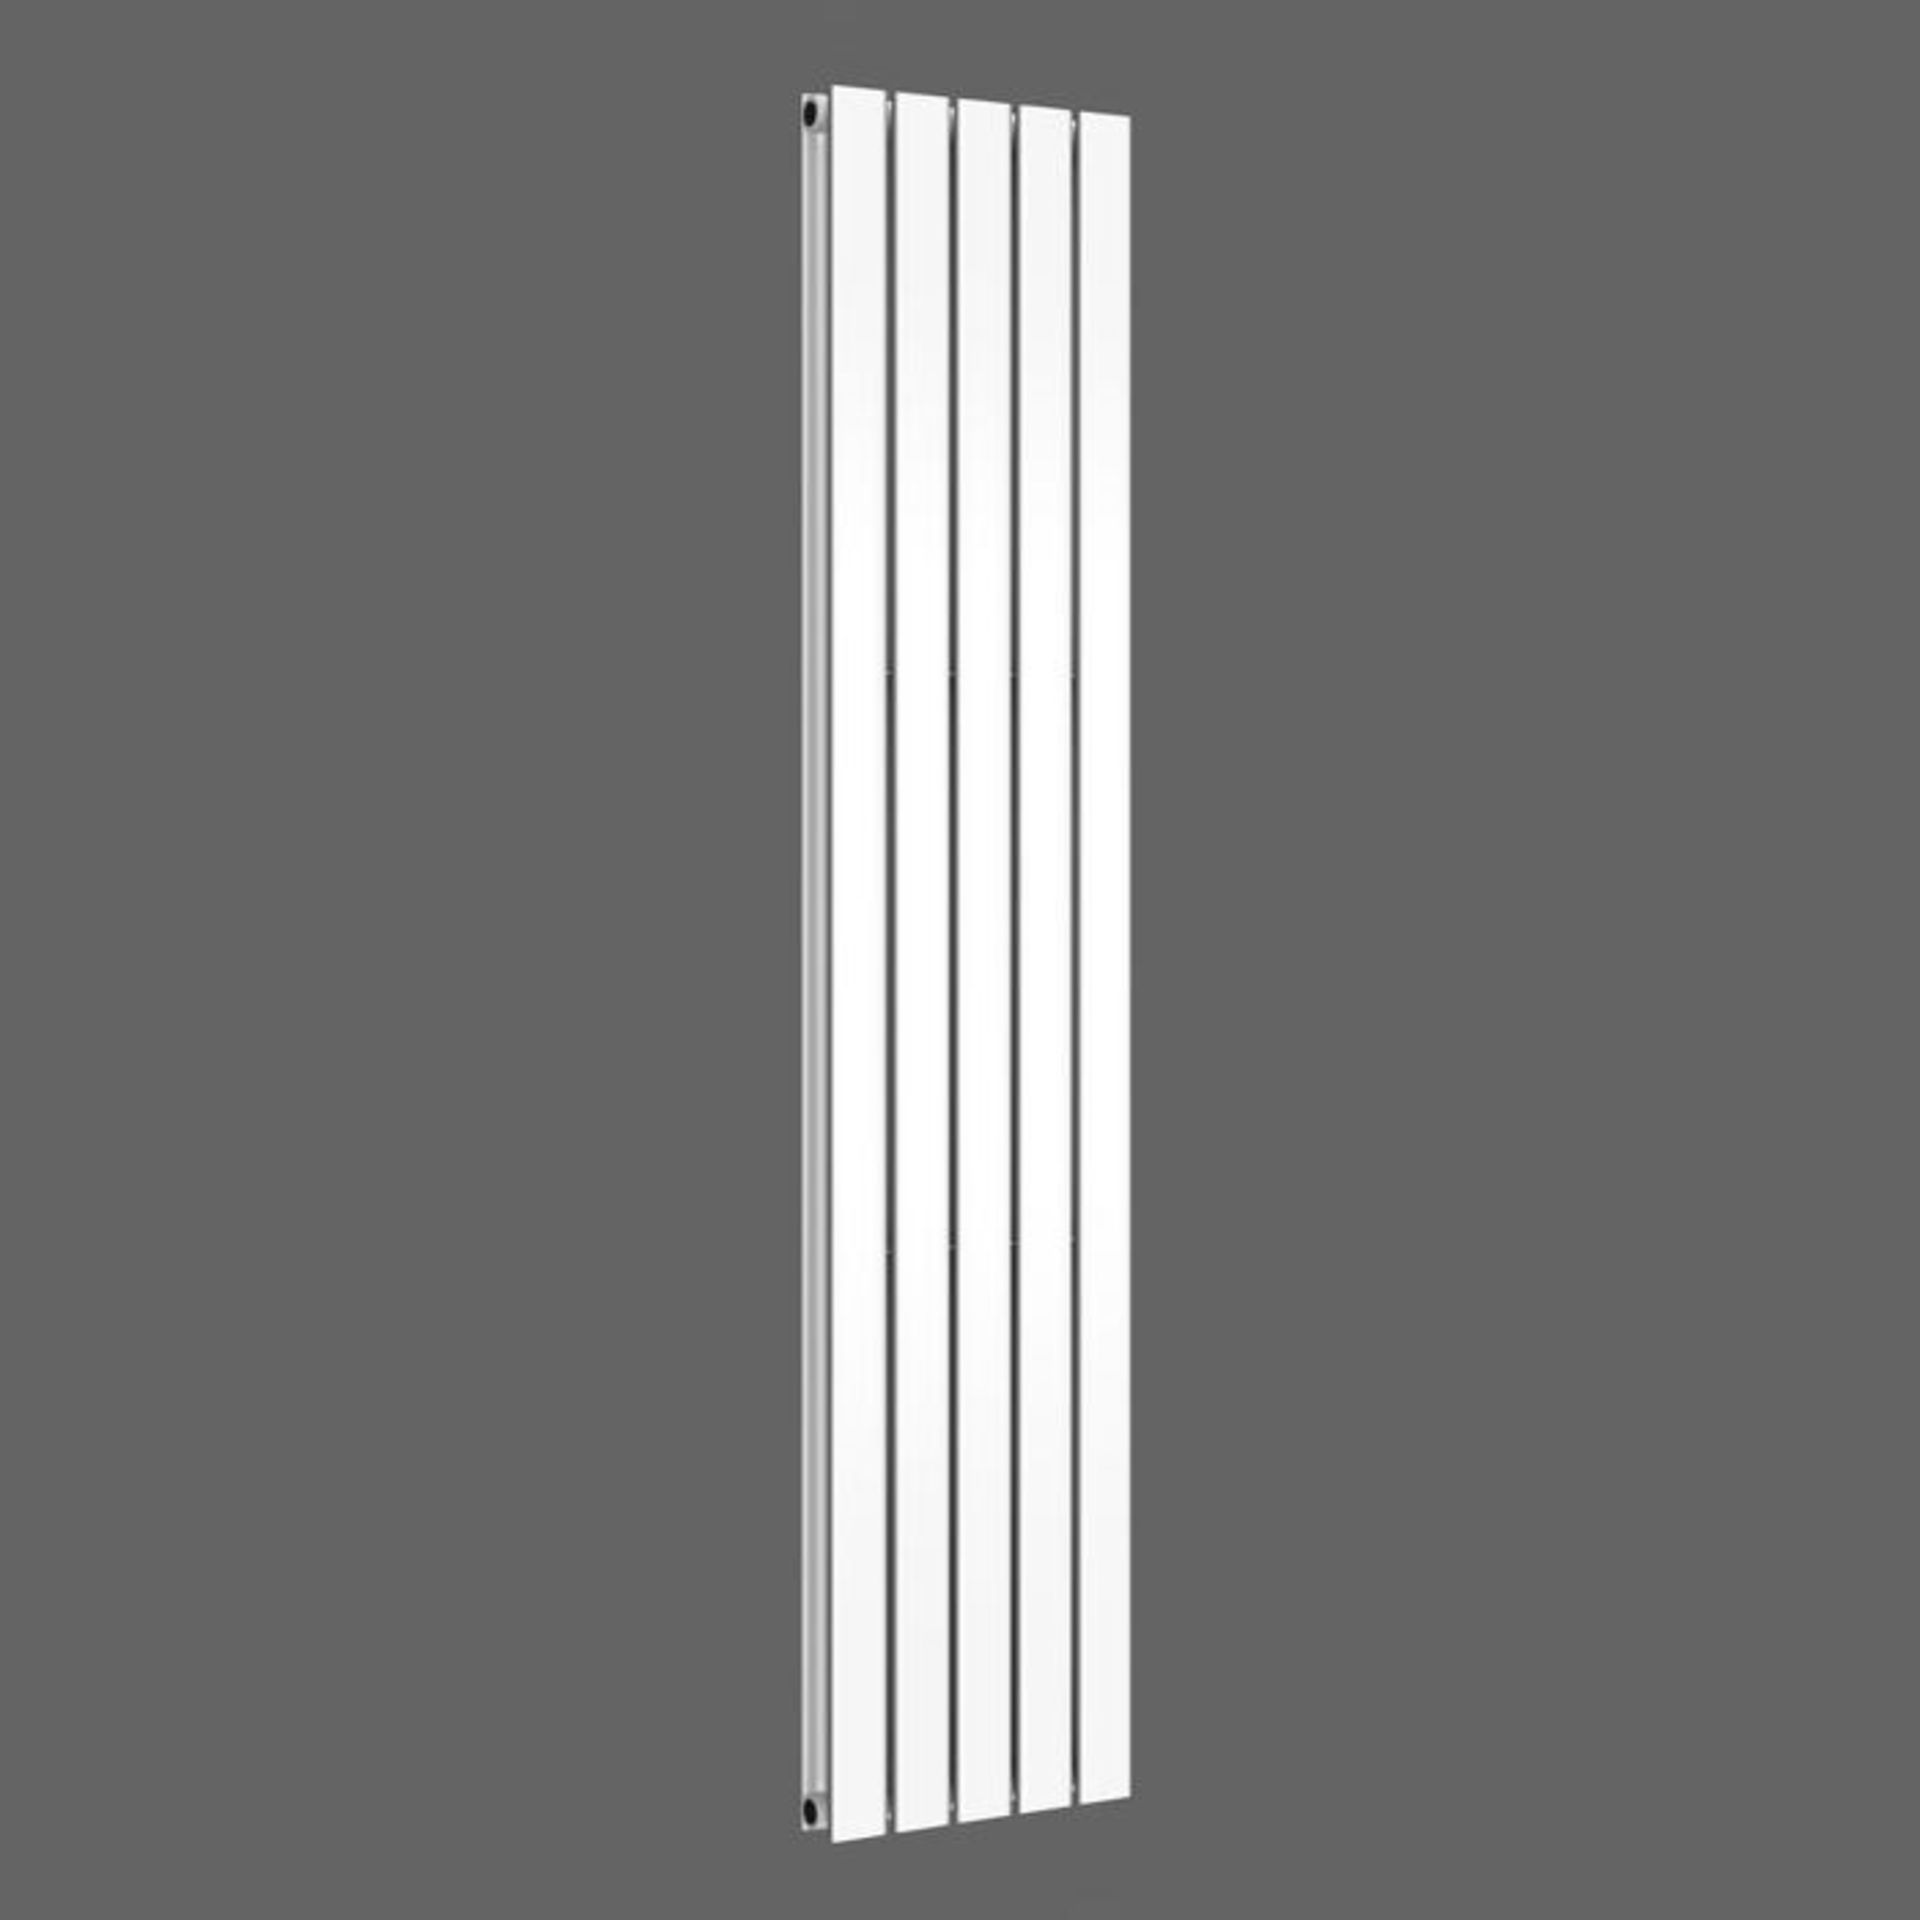 (UR54) 1800x475mm Aluminium White Flat Panel Vertical Radiator. RRP £549.99.Ultra-modern in de... - Image 3 of 4